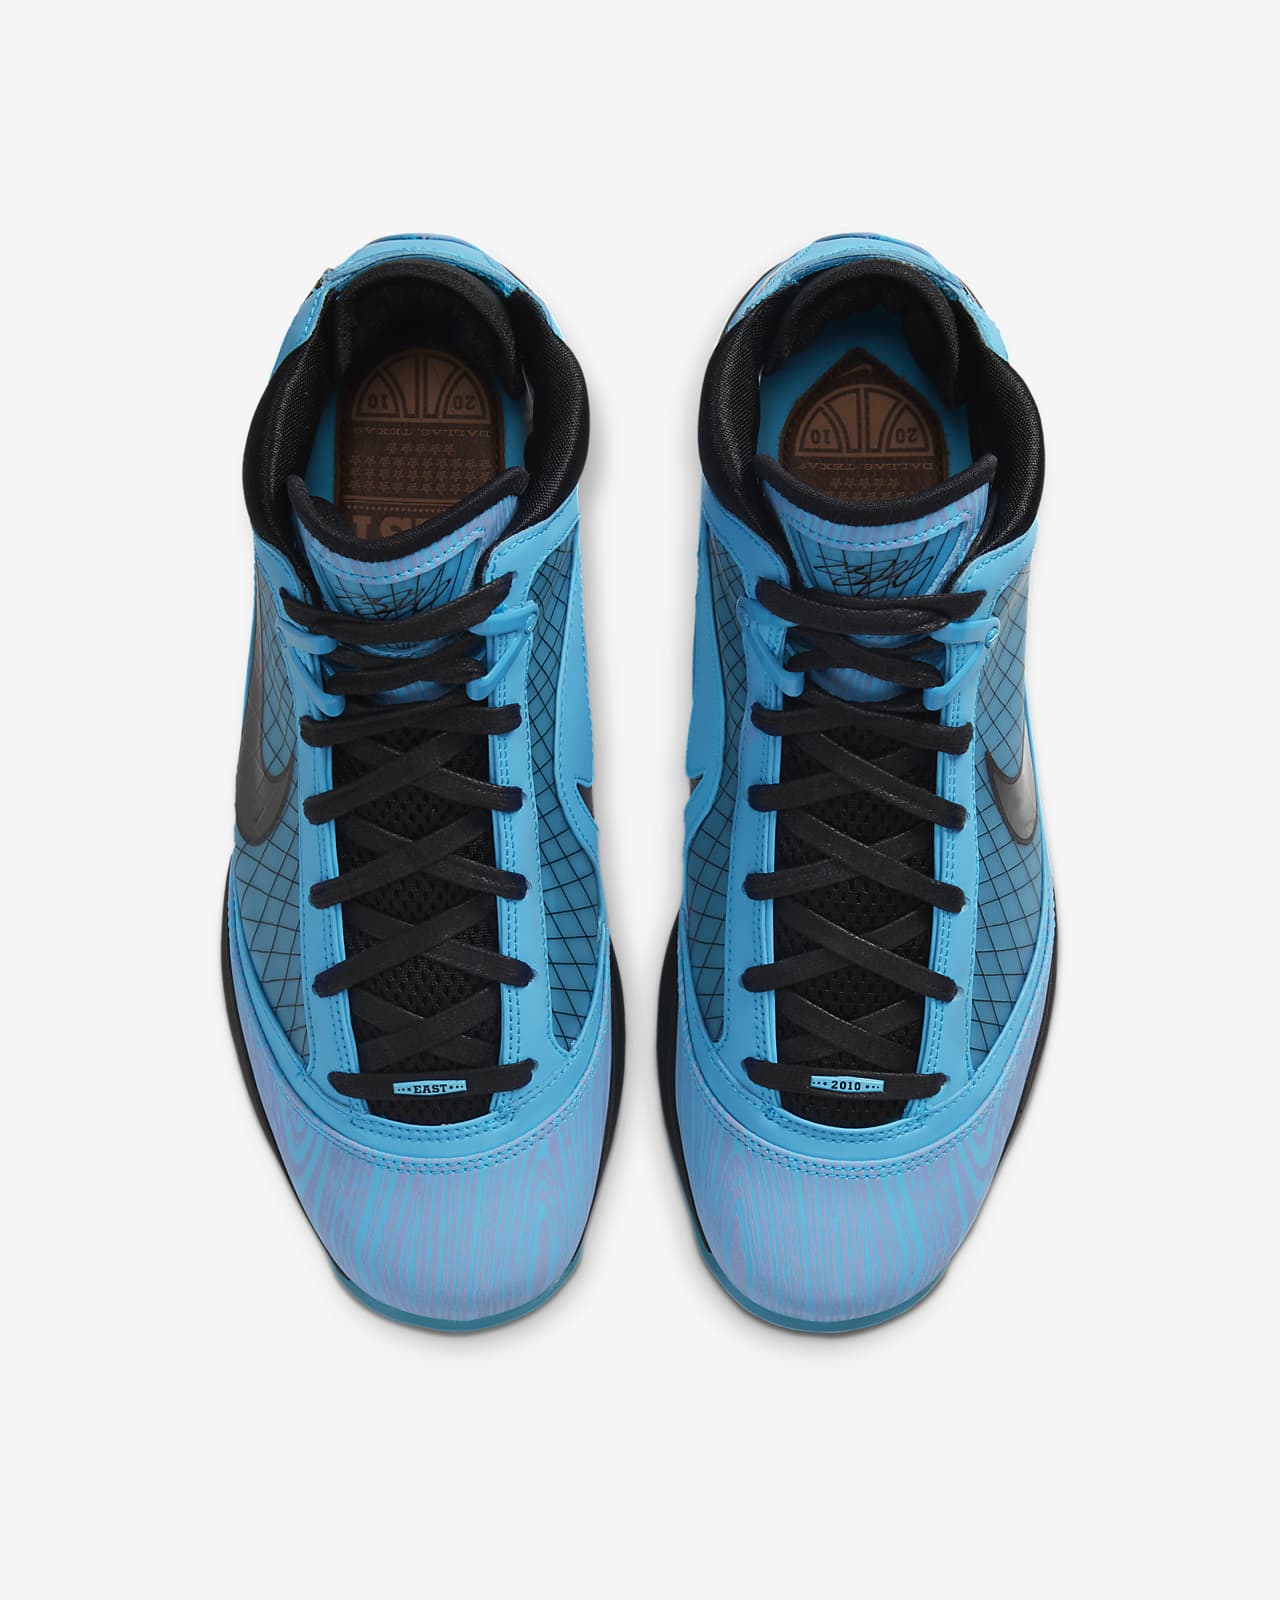 lebron 7 qs chlorine blue men's basketball shoe